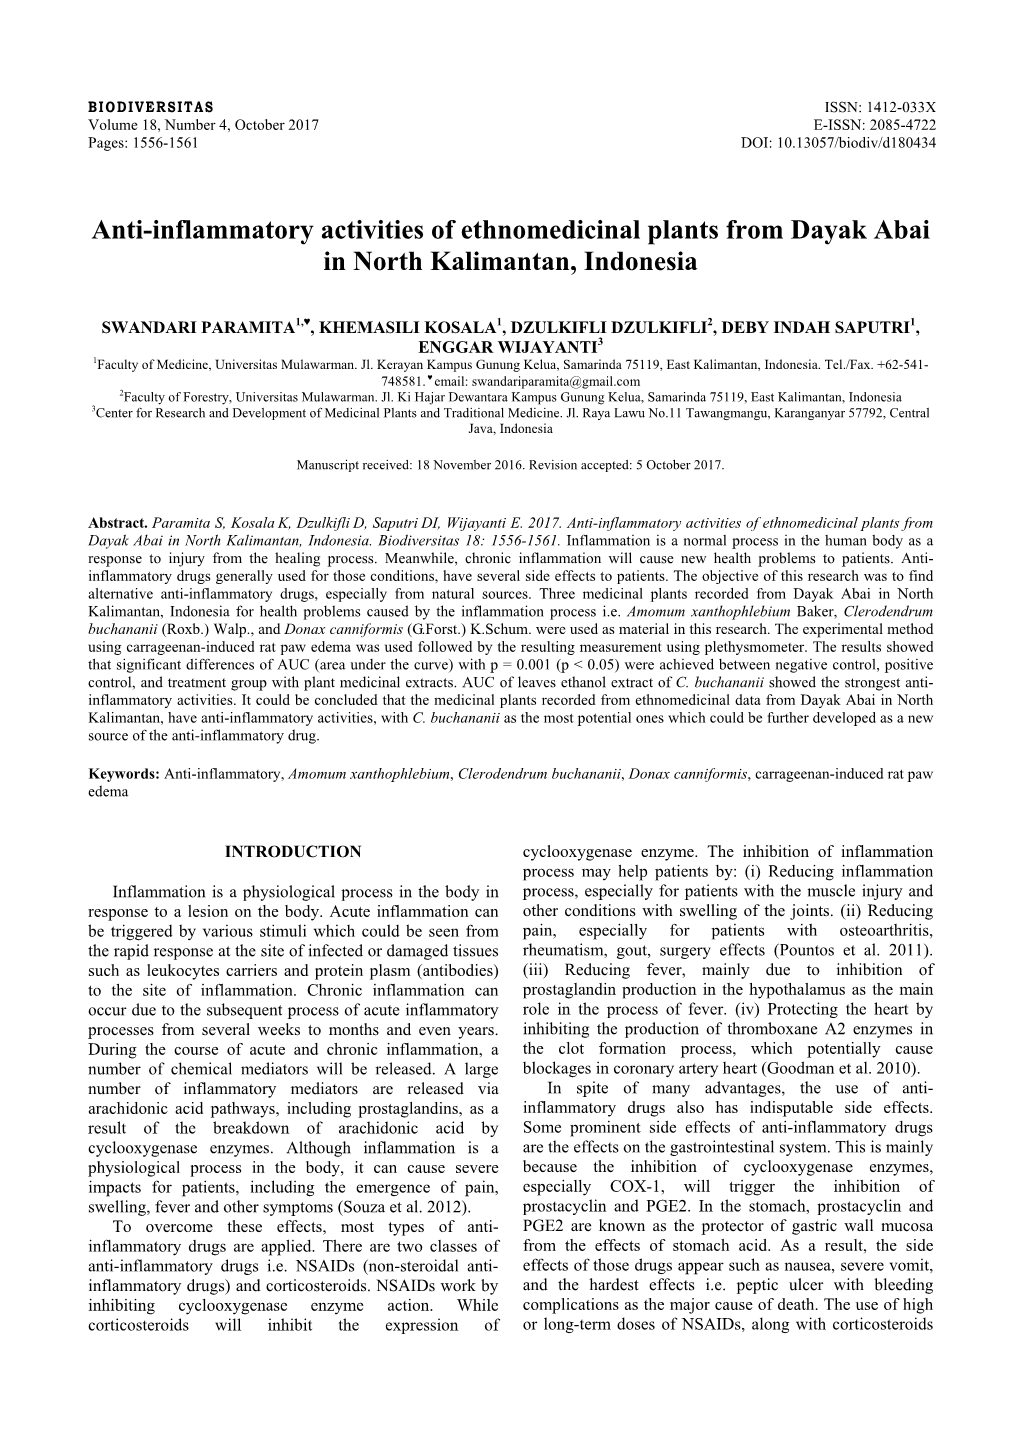 Anti-Inflammatory Activities of Ethnomedicinal Plants from Dayak Abai in North Kalimantan, Indonesia